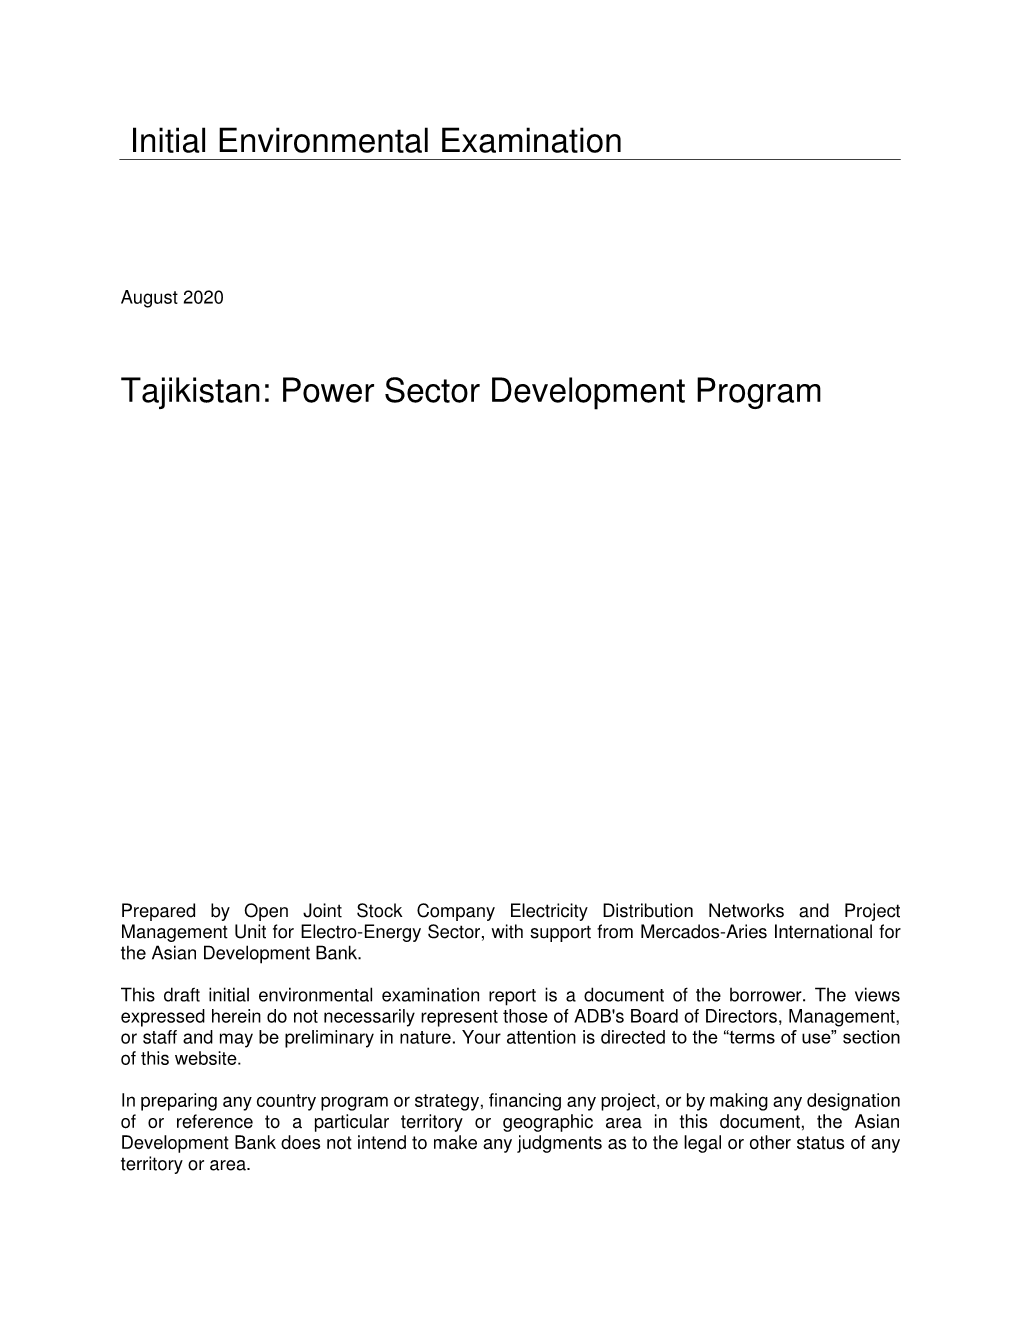 Power Sector Development Program: Initial Environmental Examination